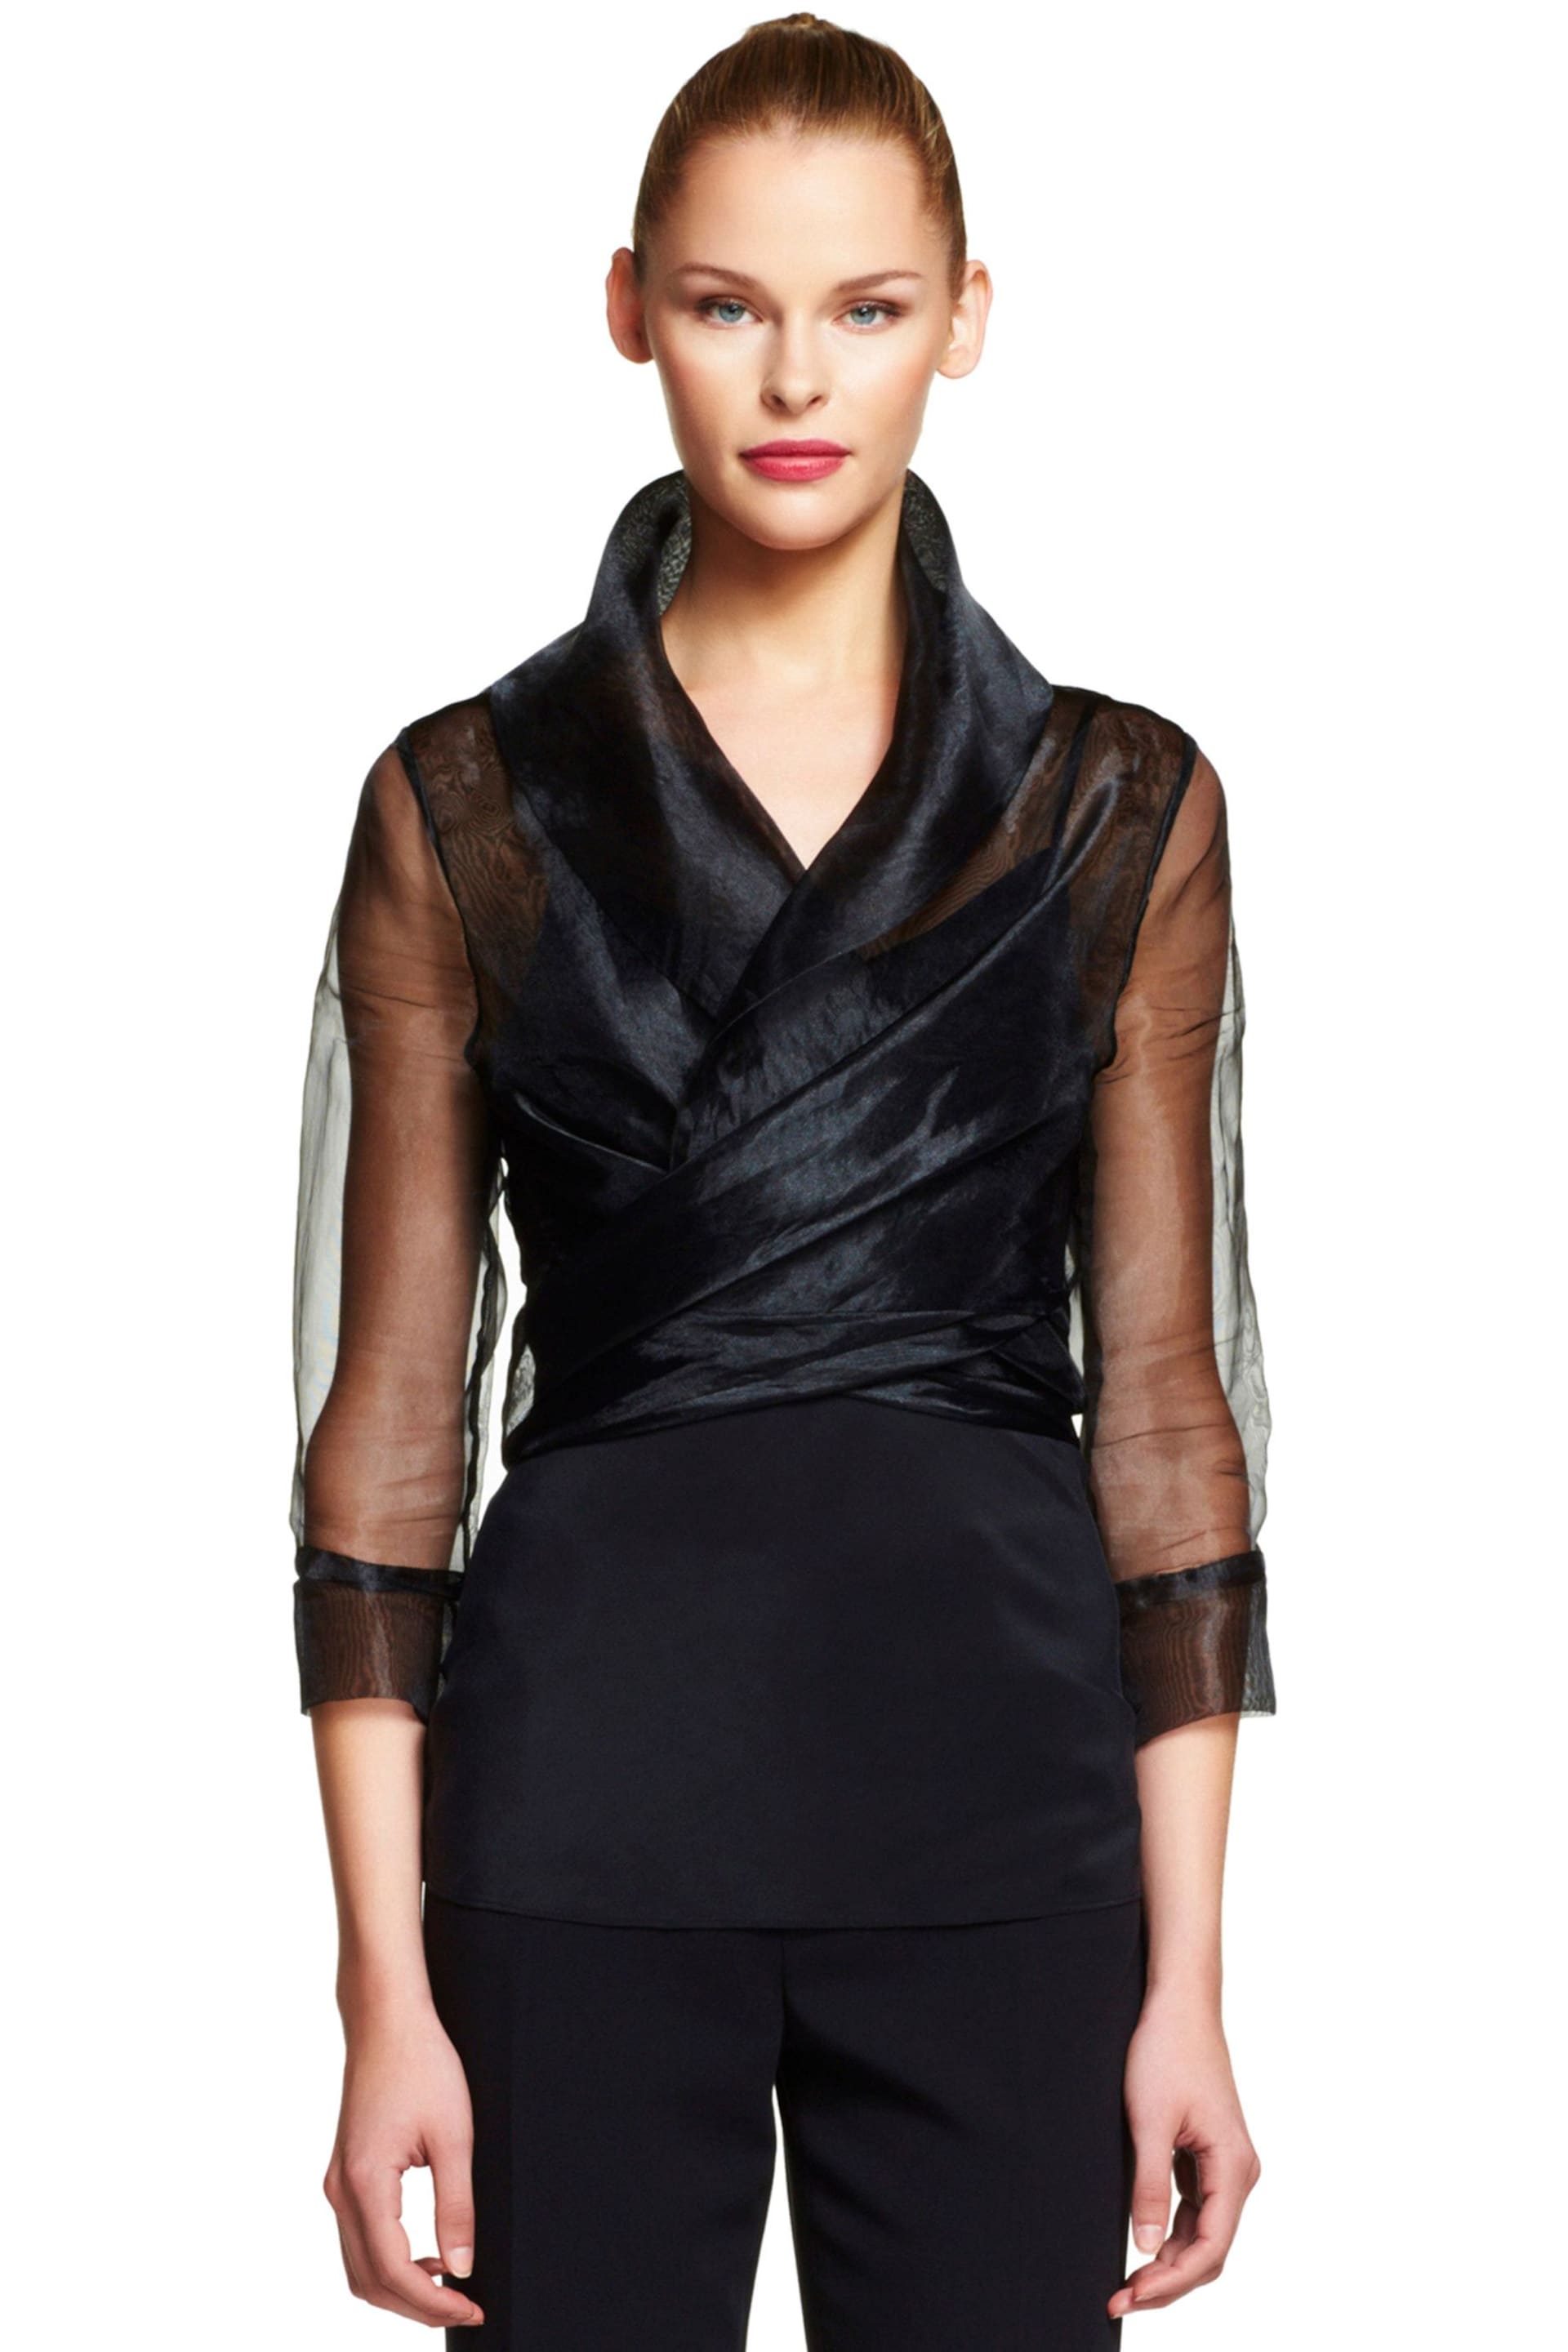 Adrianna Papell Short Sleeve Black Organza Wrap Jacket - Image 3 of 3